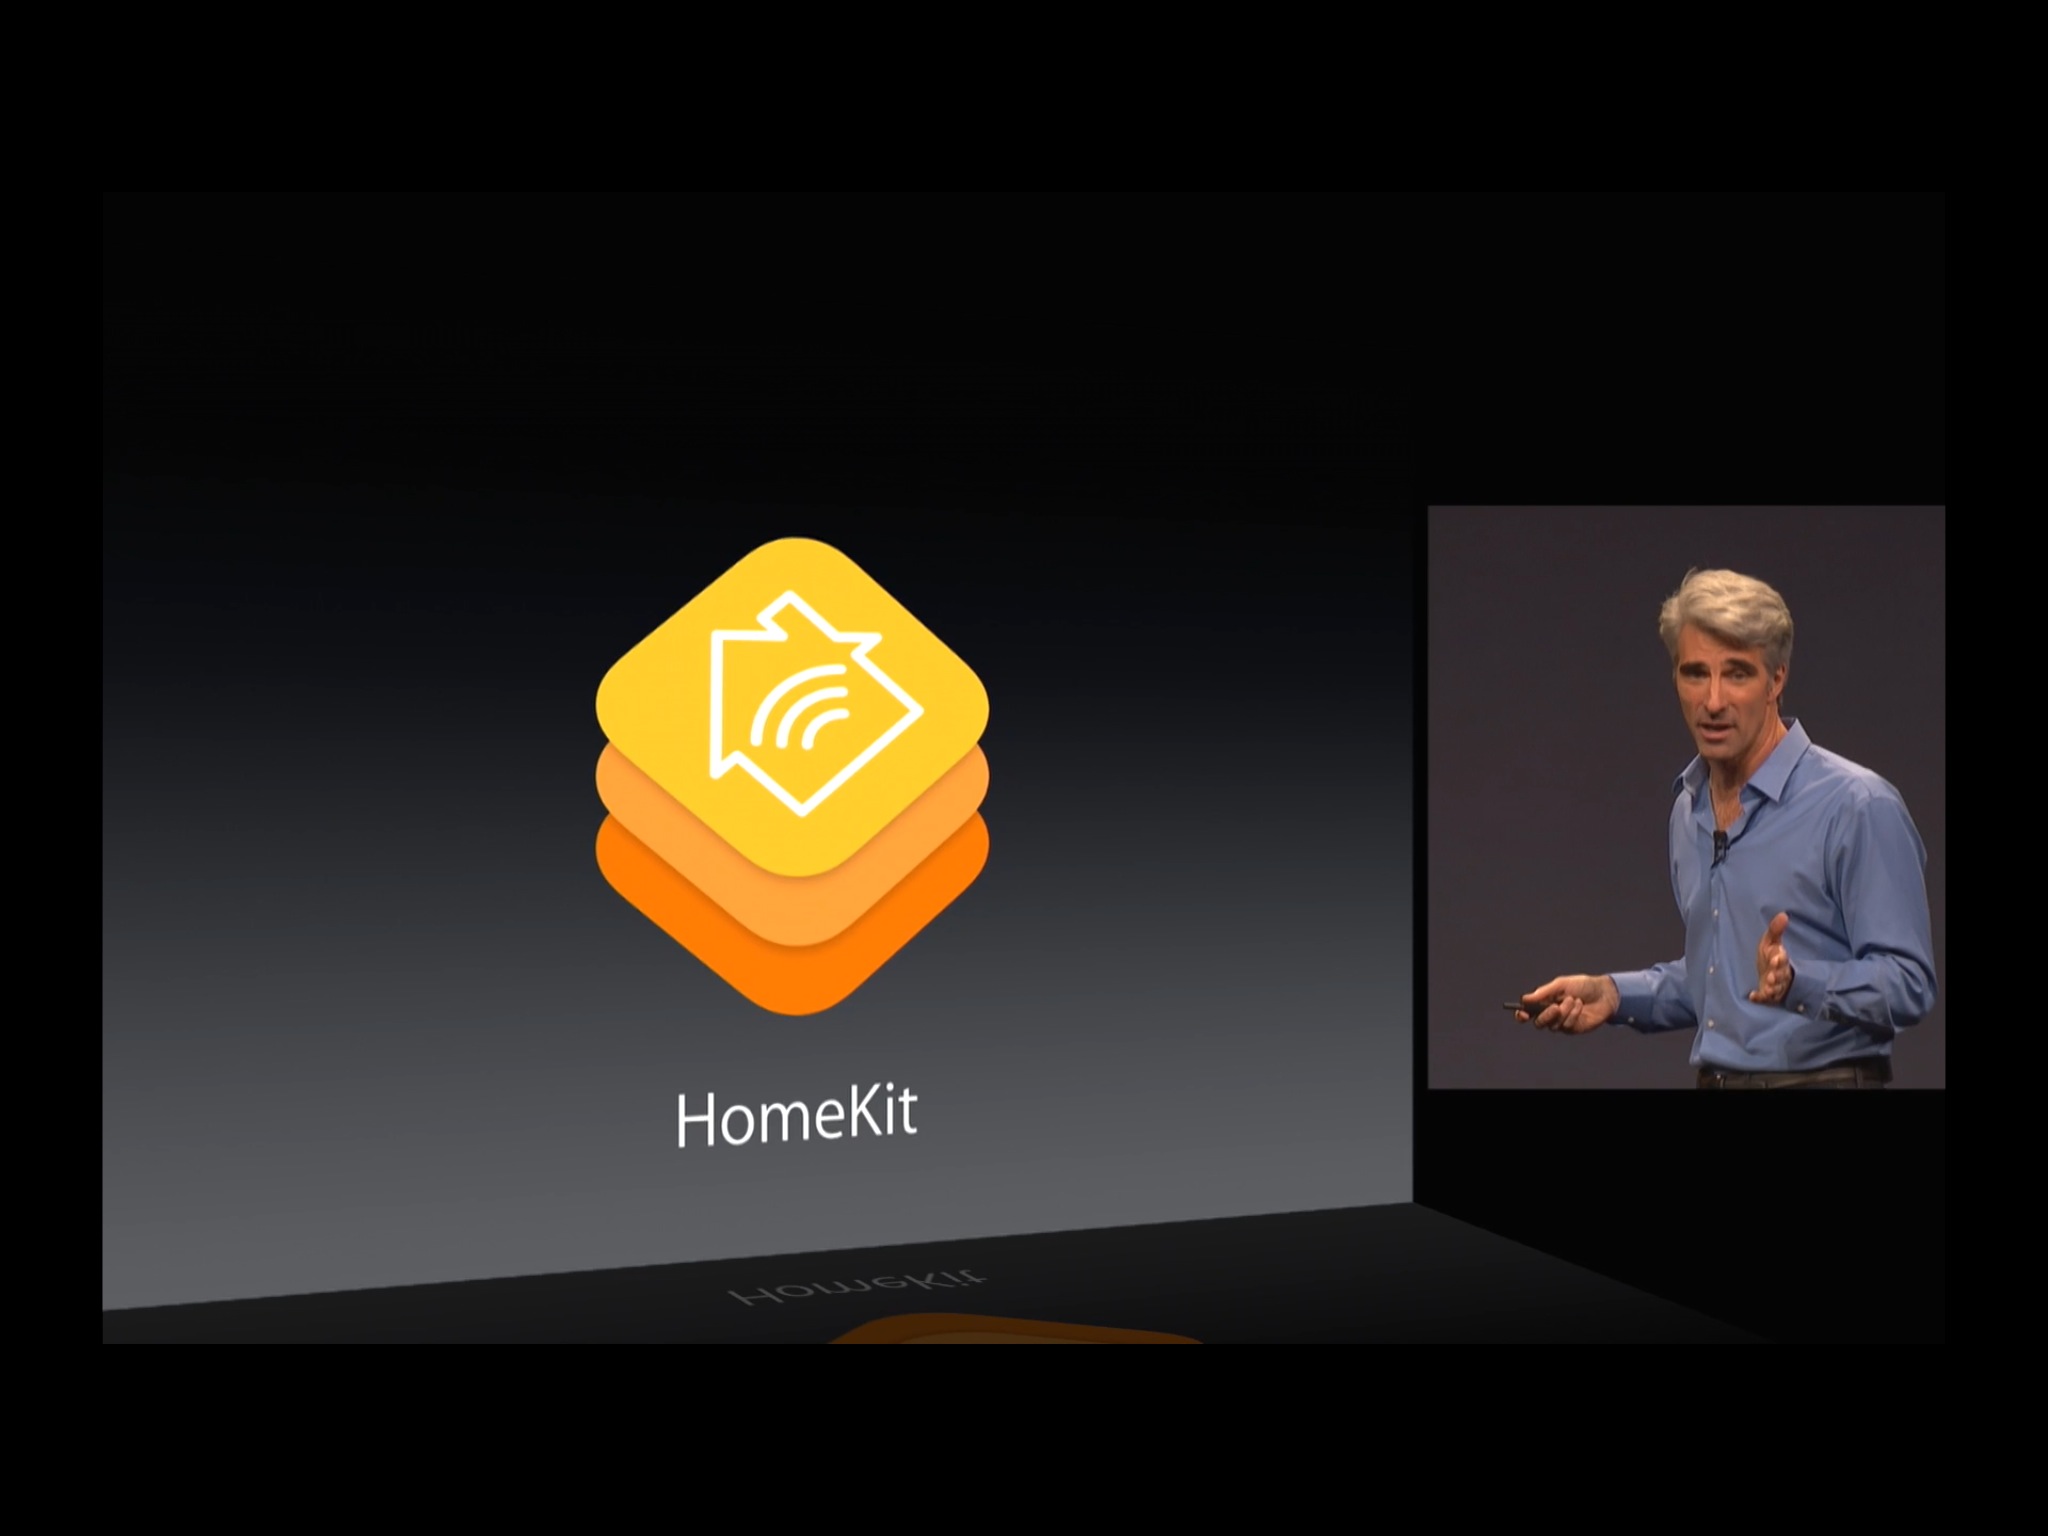 HomeKit in iOS 8: Explained